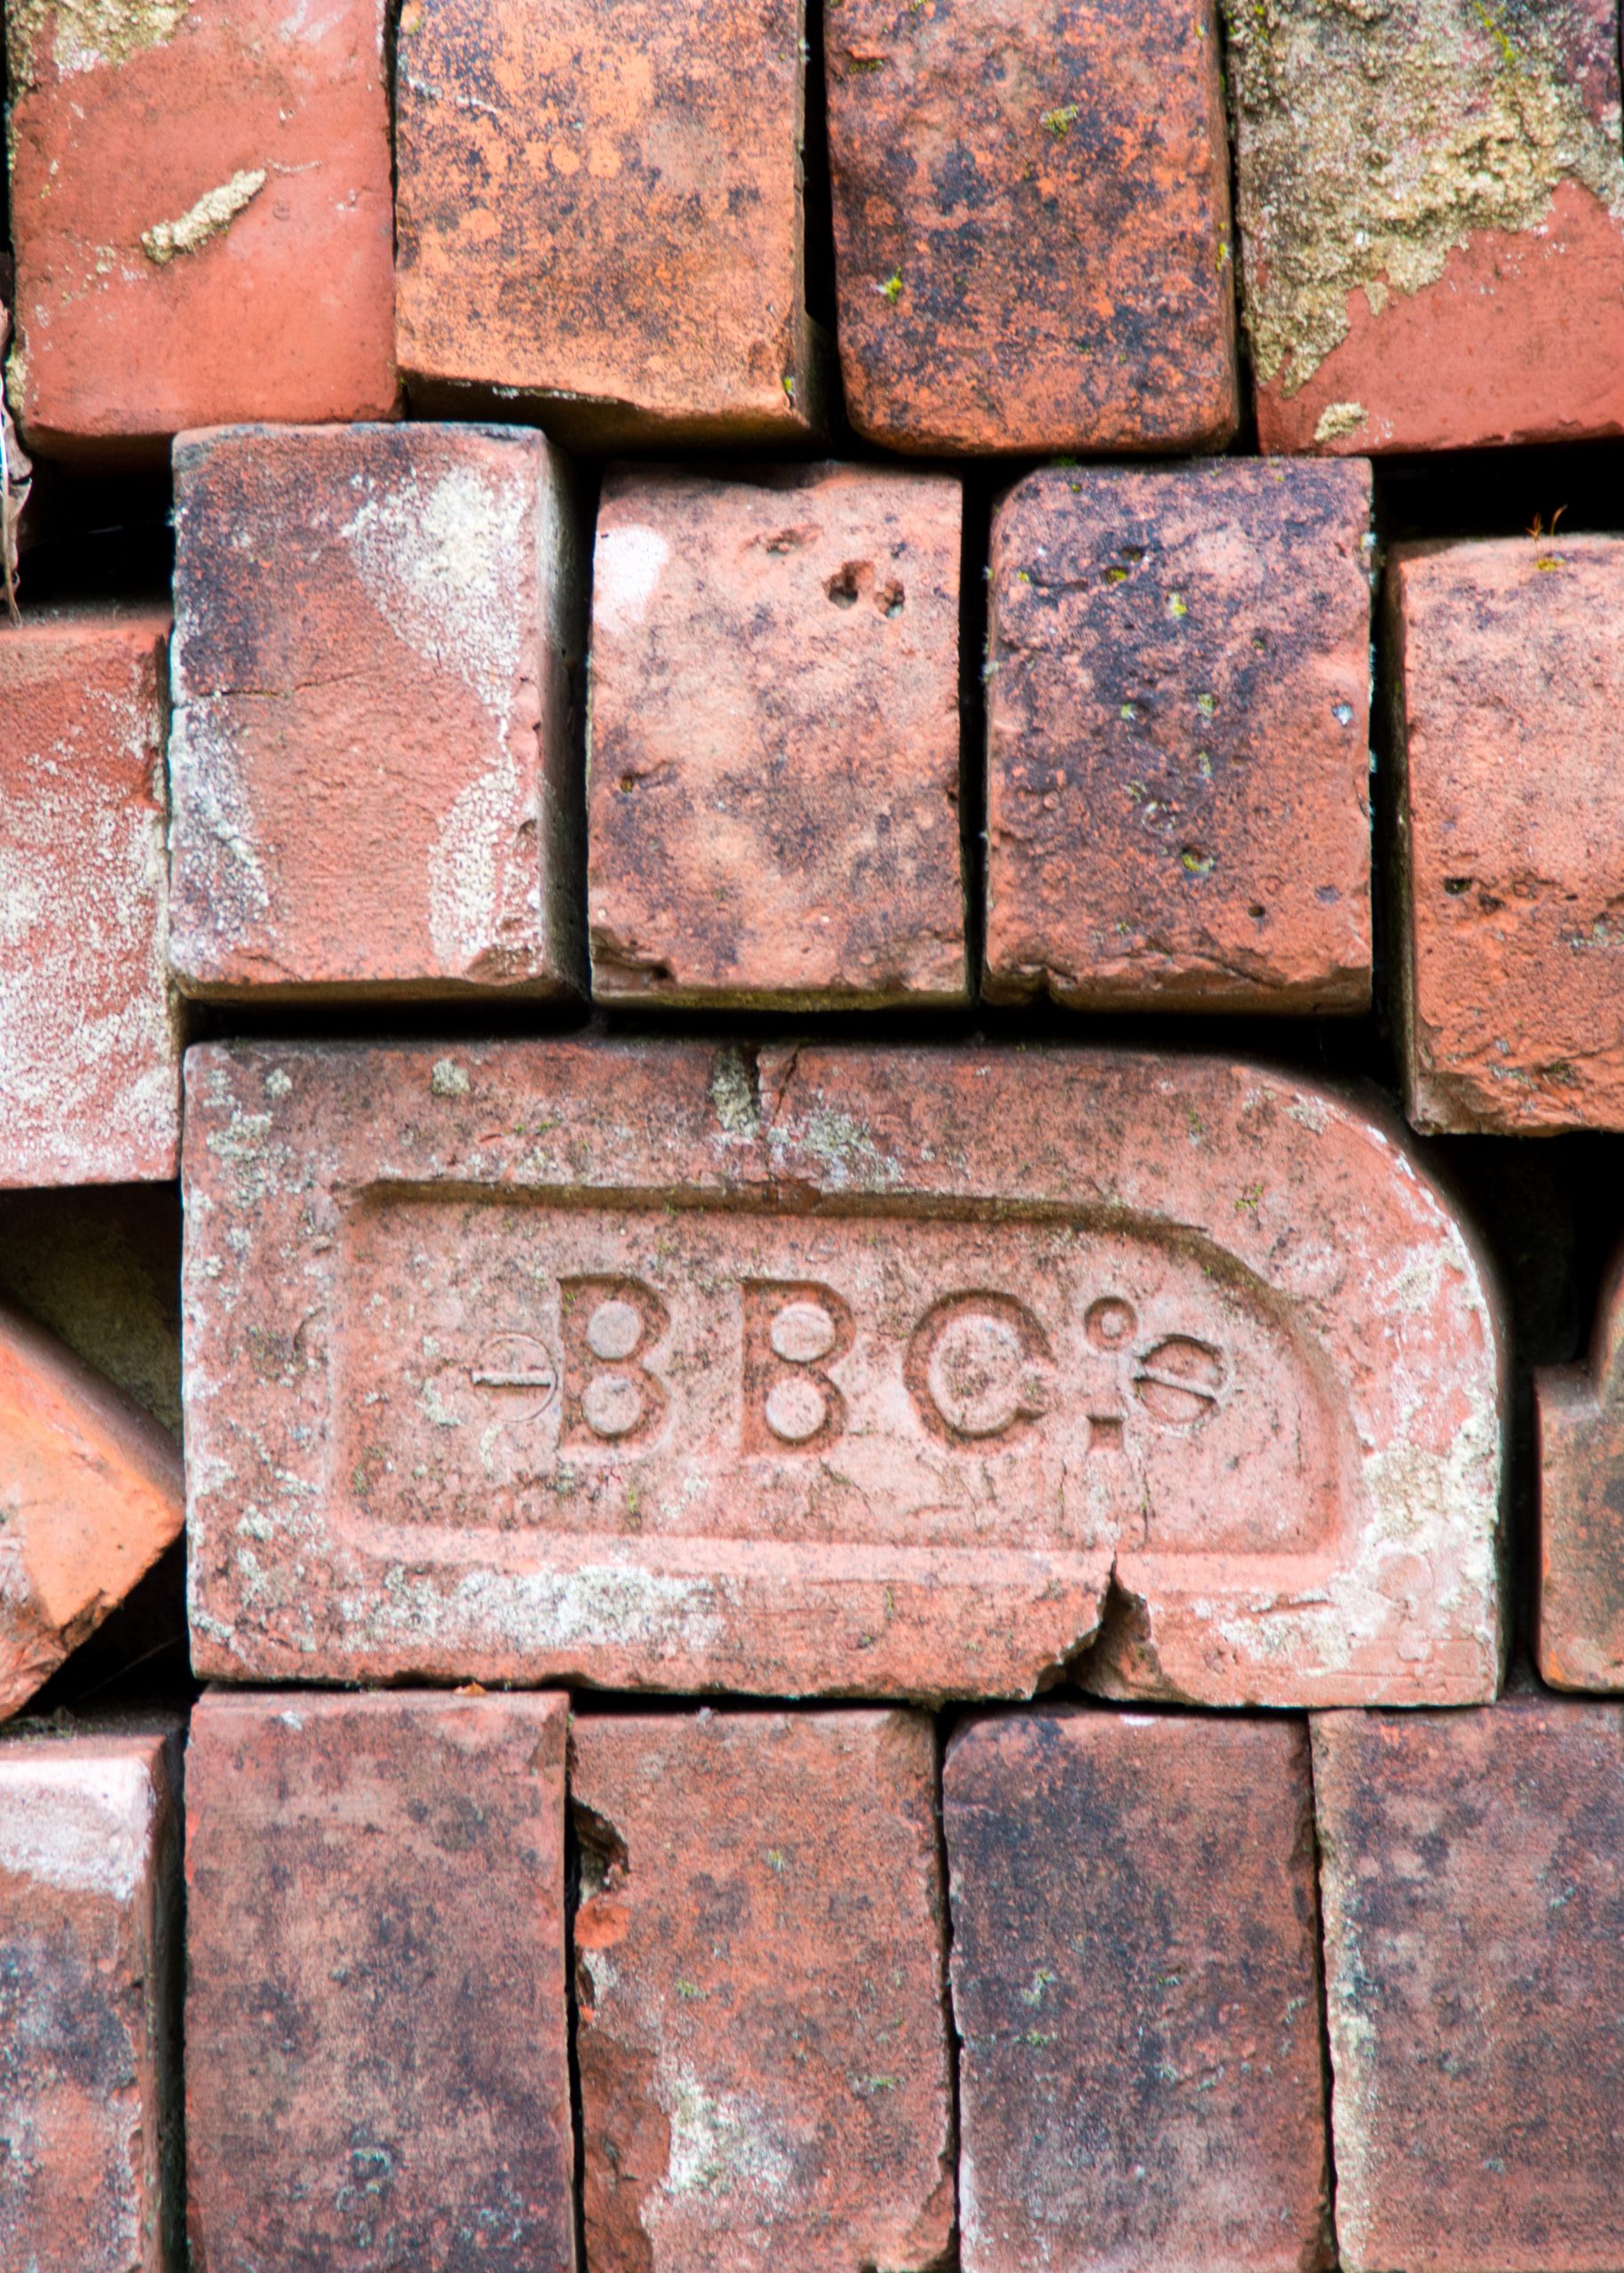 Sponsor the Brickworks